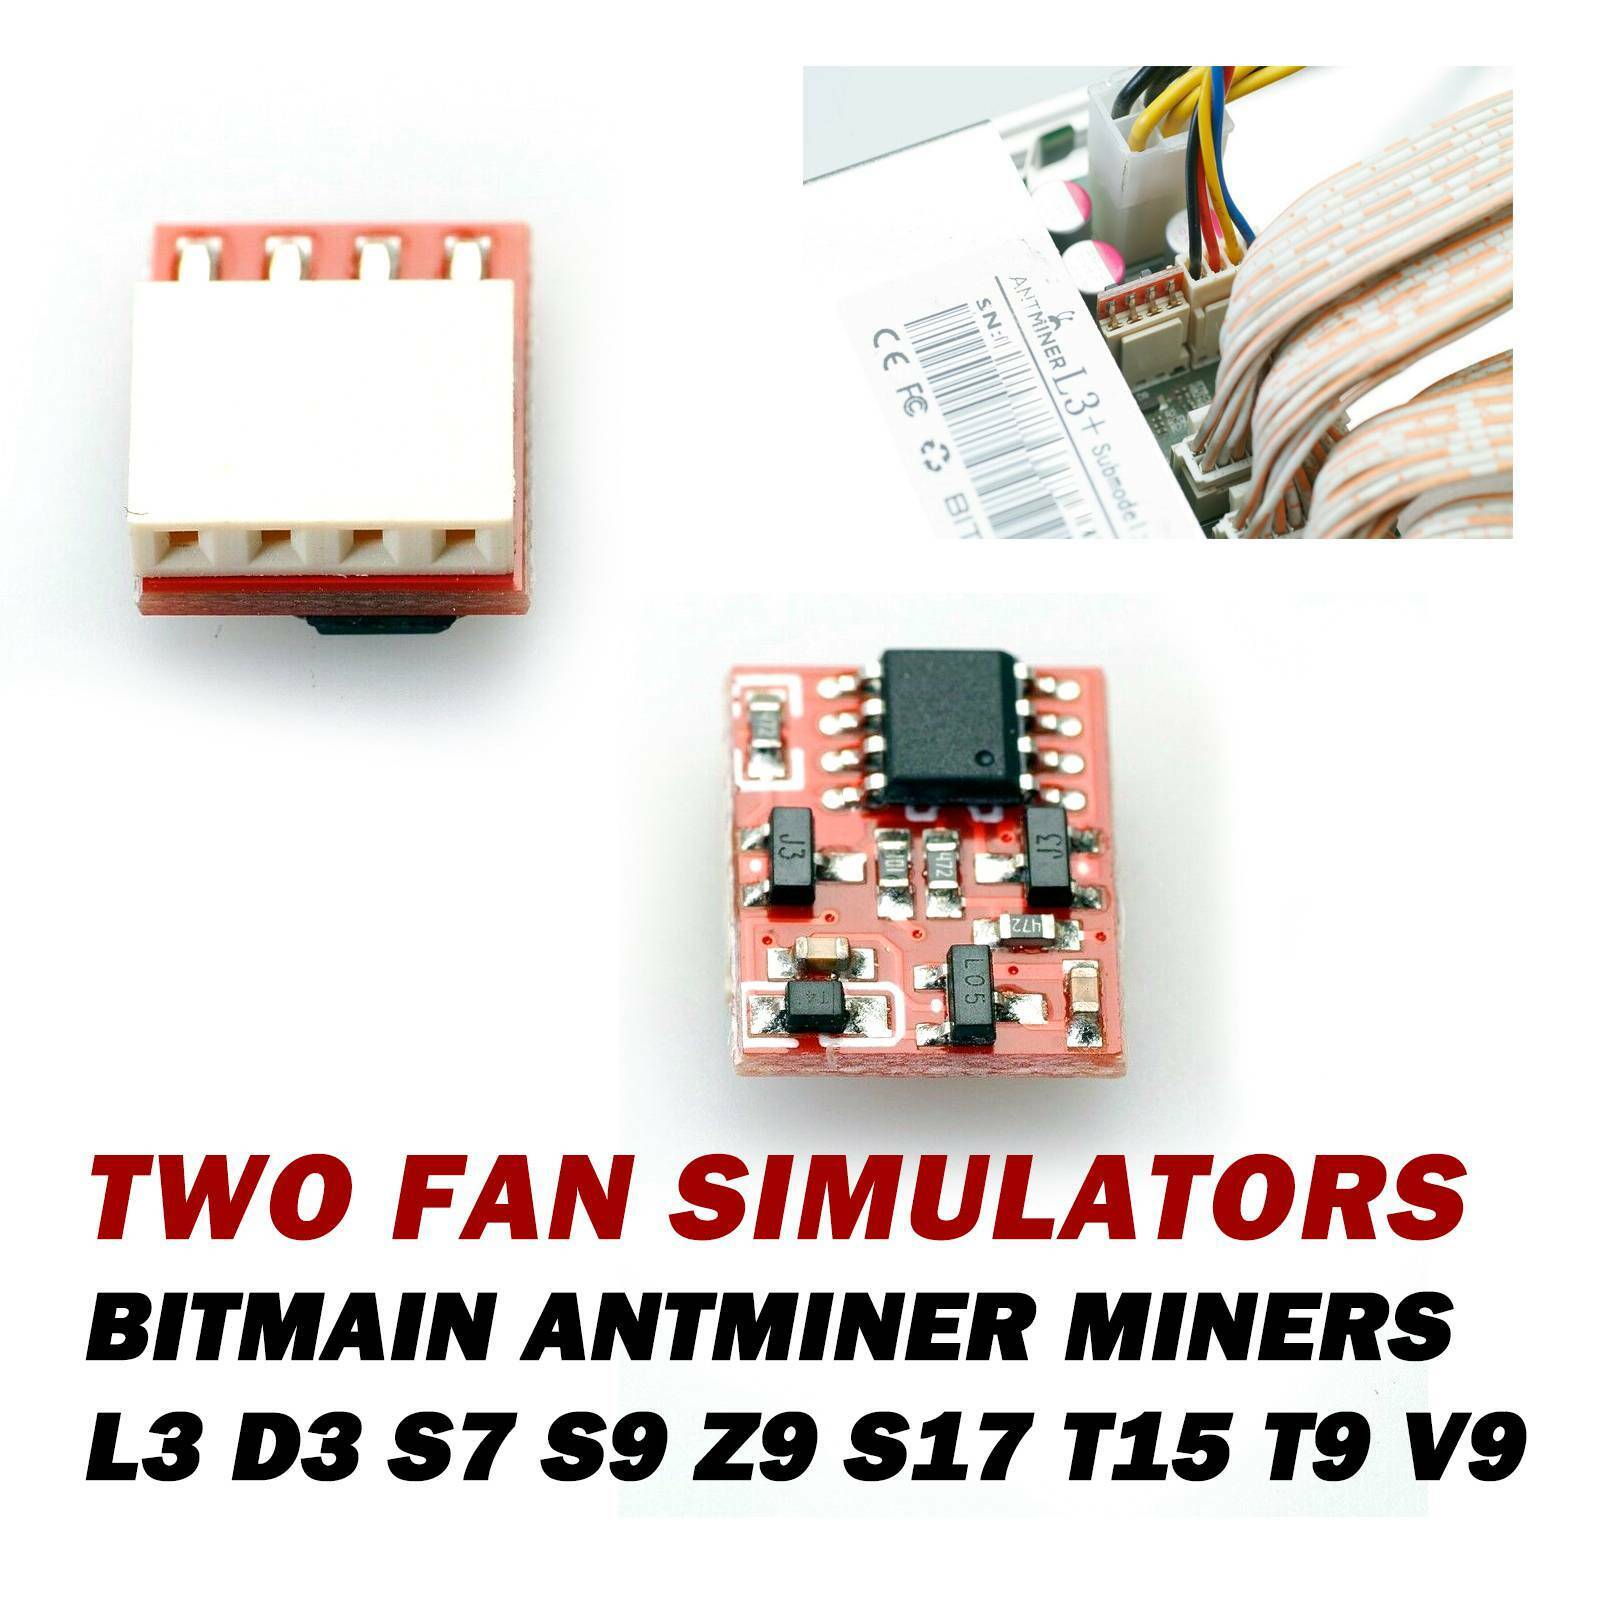 2Pcs Fan Simulators fit Bitmain Antminer Miner L3 D3 S7 S9 Z9 S17 T15 T9 V9 Unbranded Does not apply - фотография #2